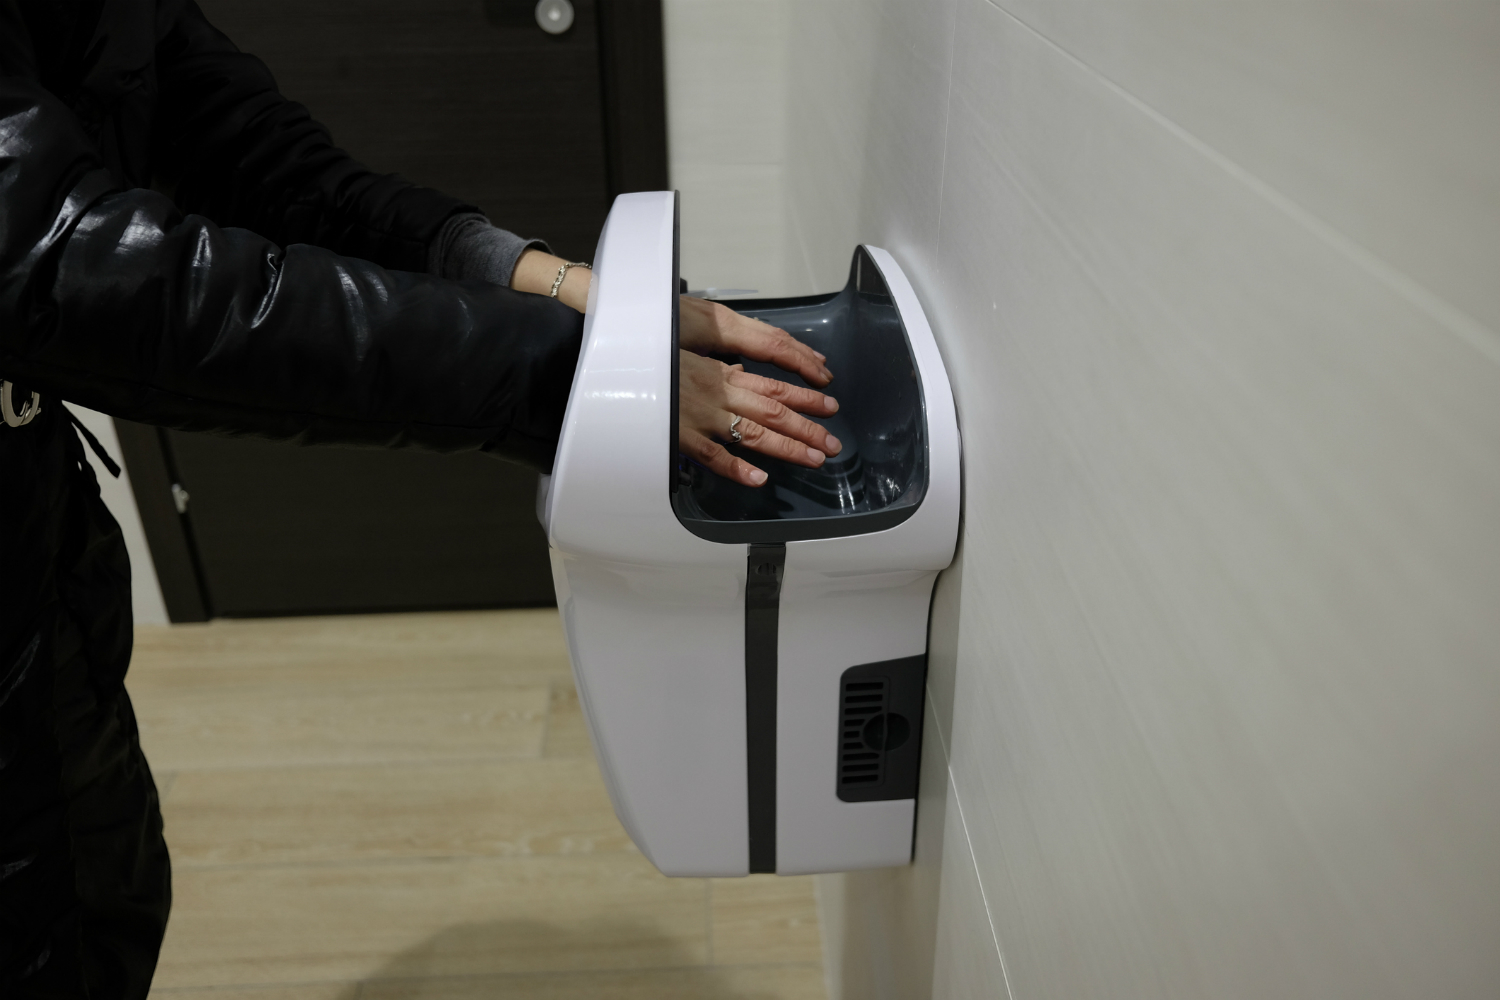 Bathroom Hand Dryers May Circulate Fecal Bacteria, Study Says